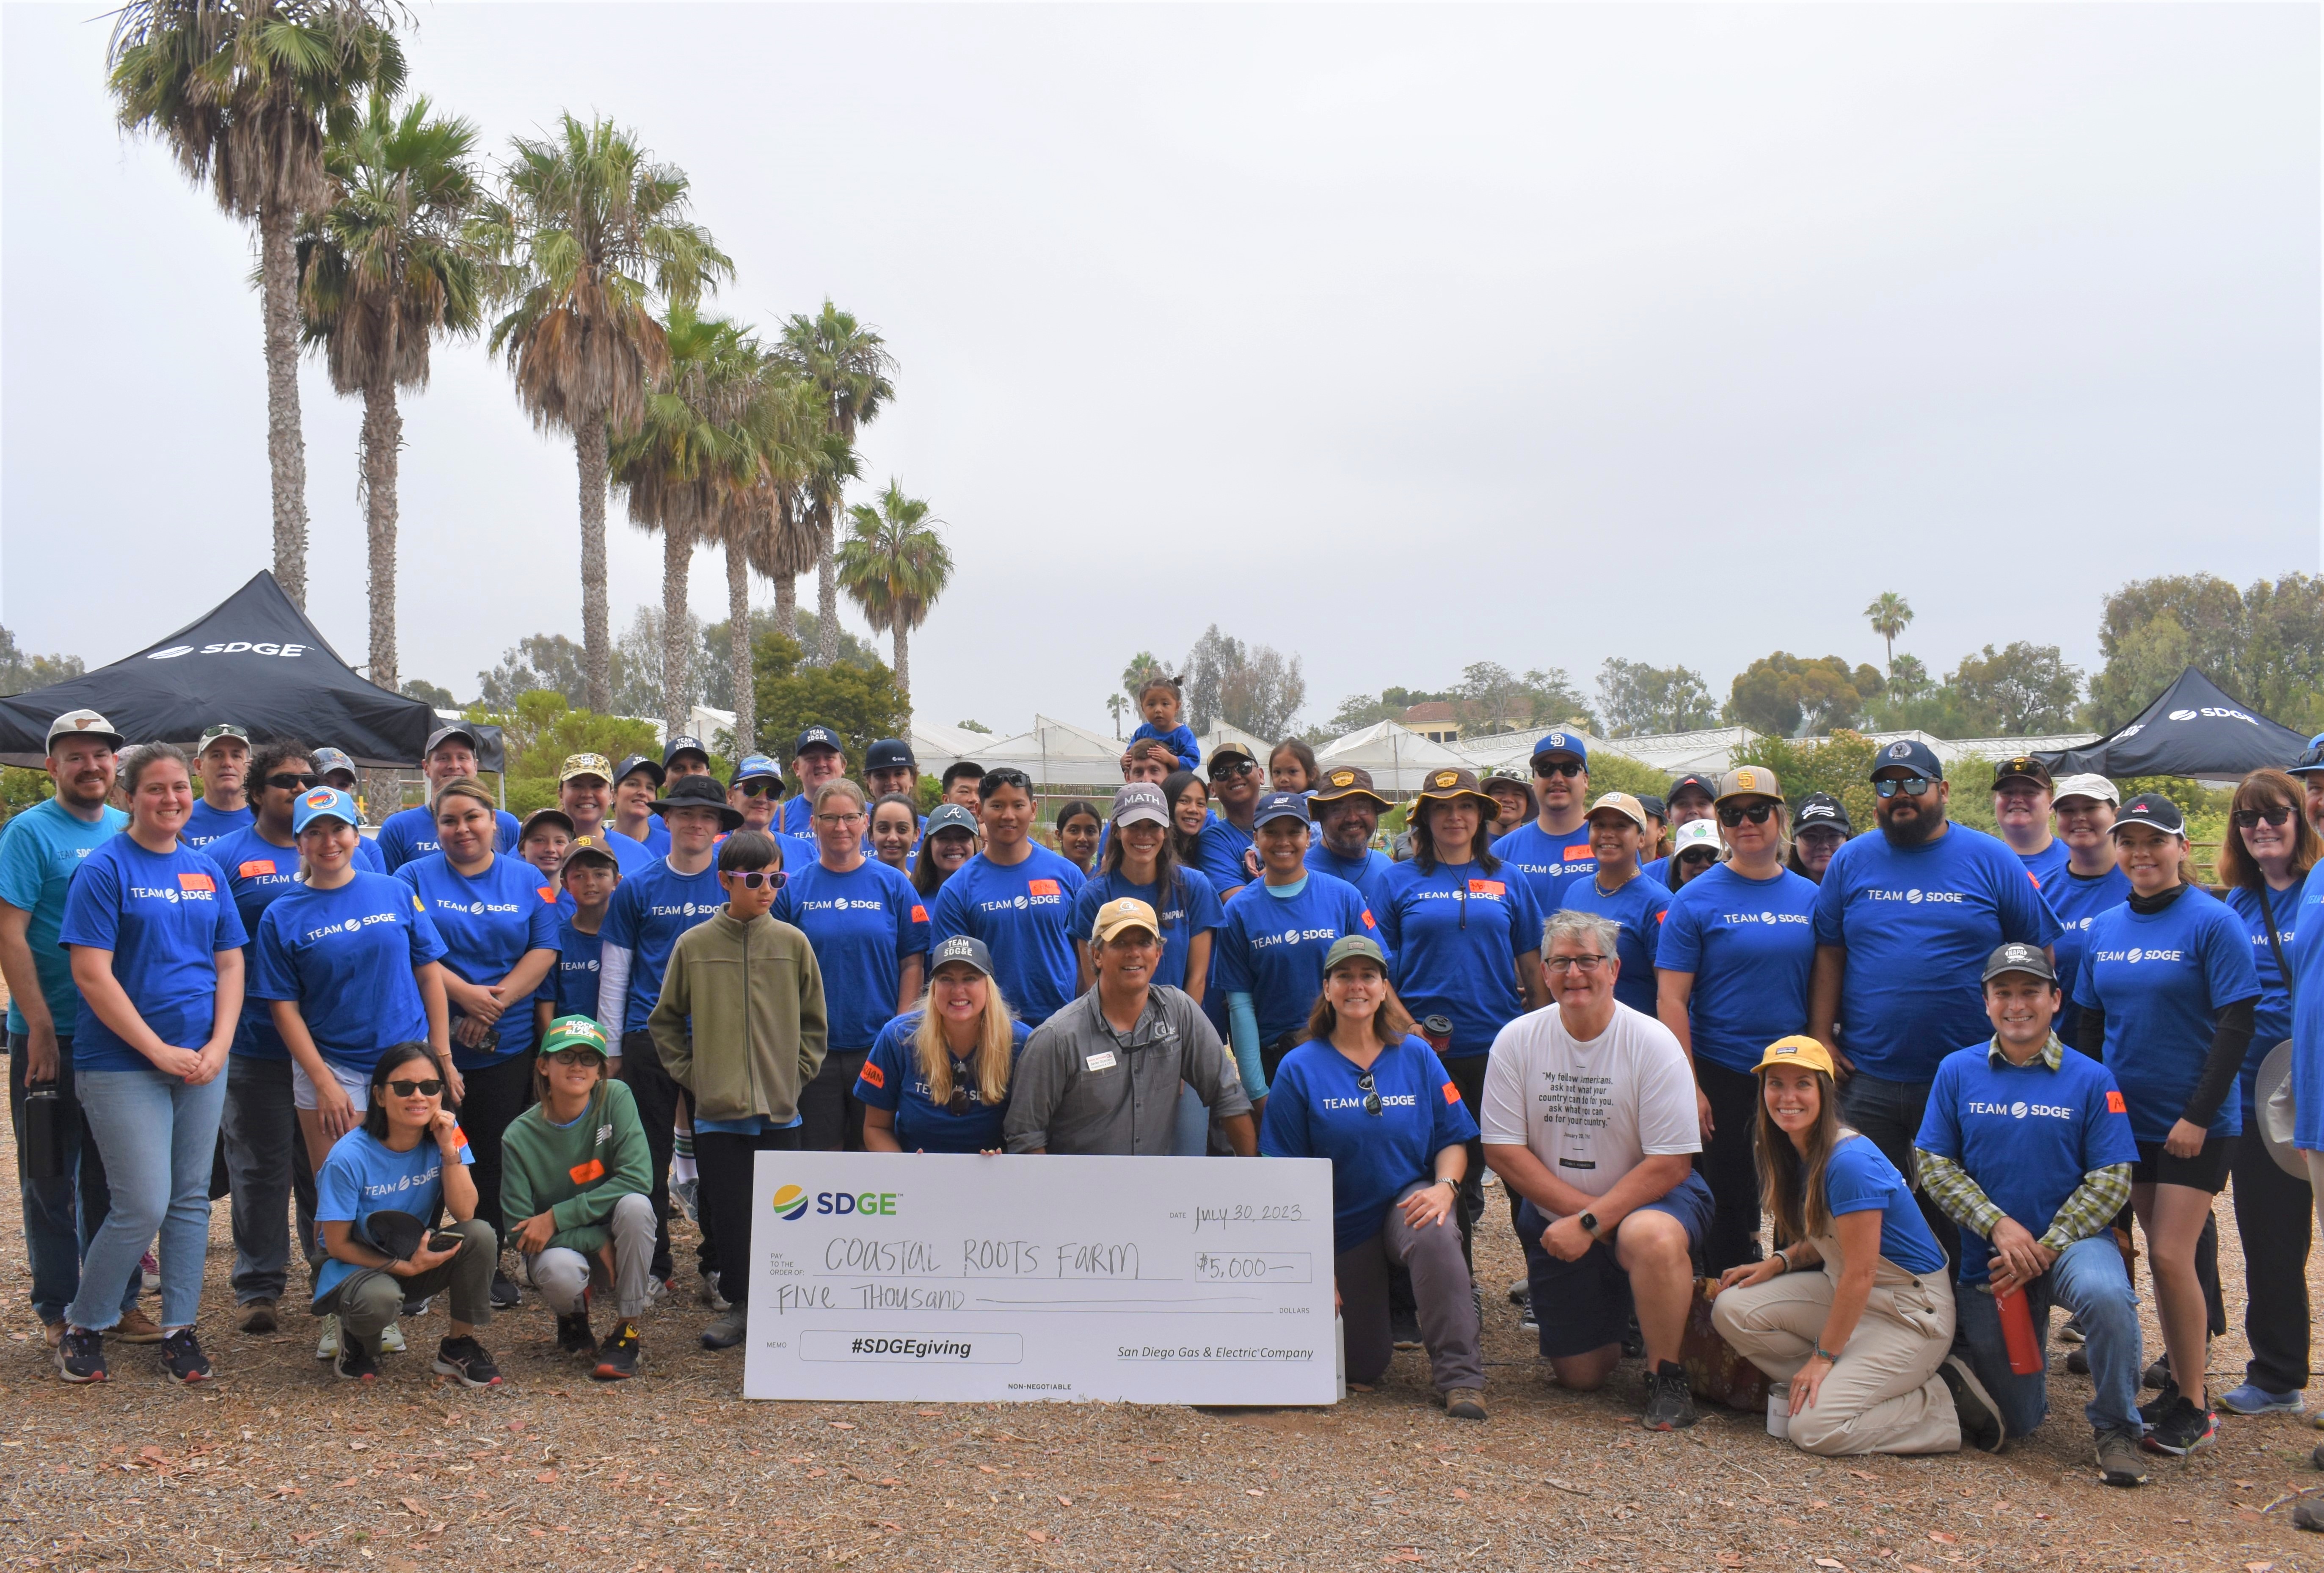 Coastal Roots Farm Makes Facility Improvements with Help of SDG&E Volunteers 